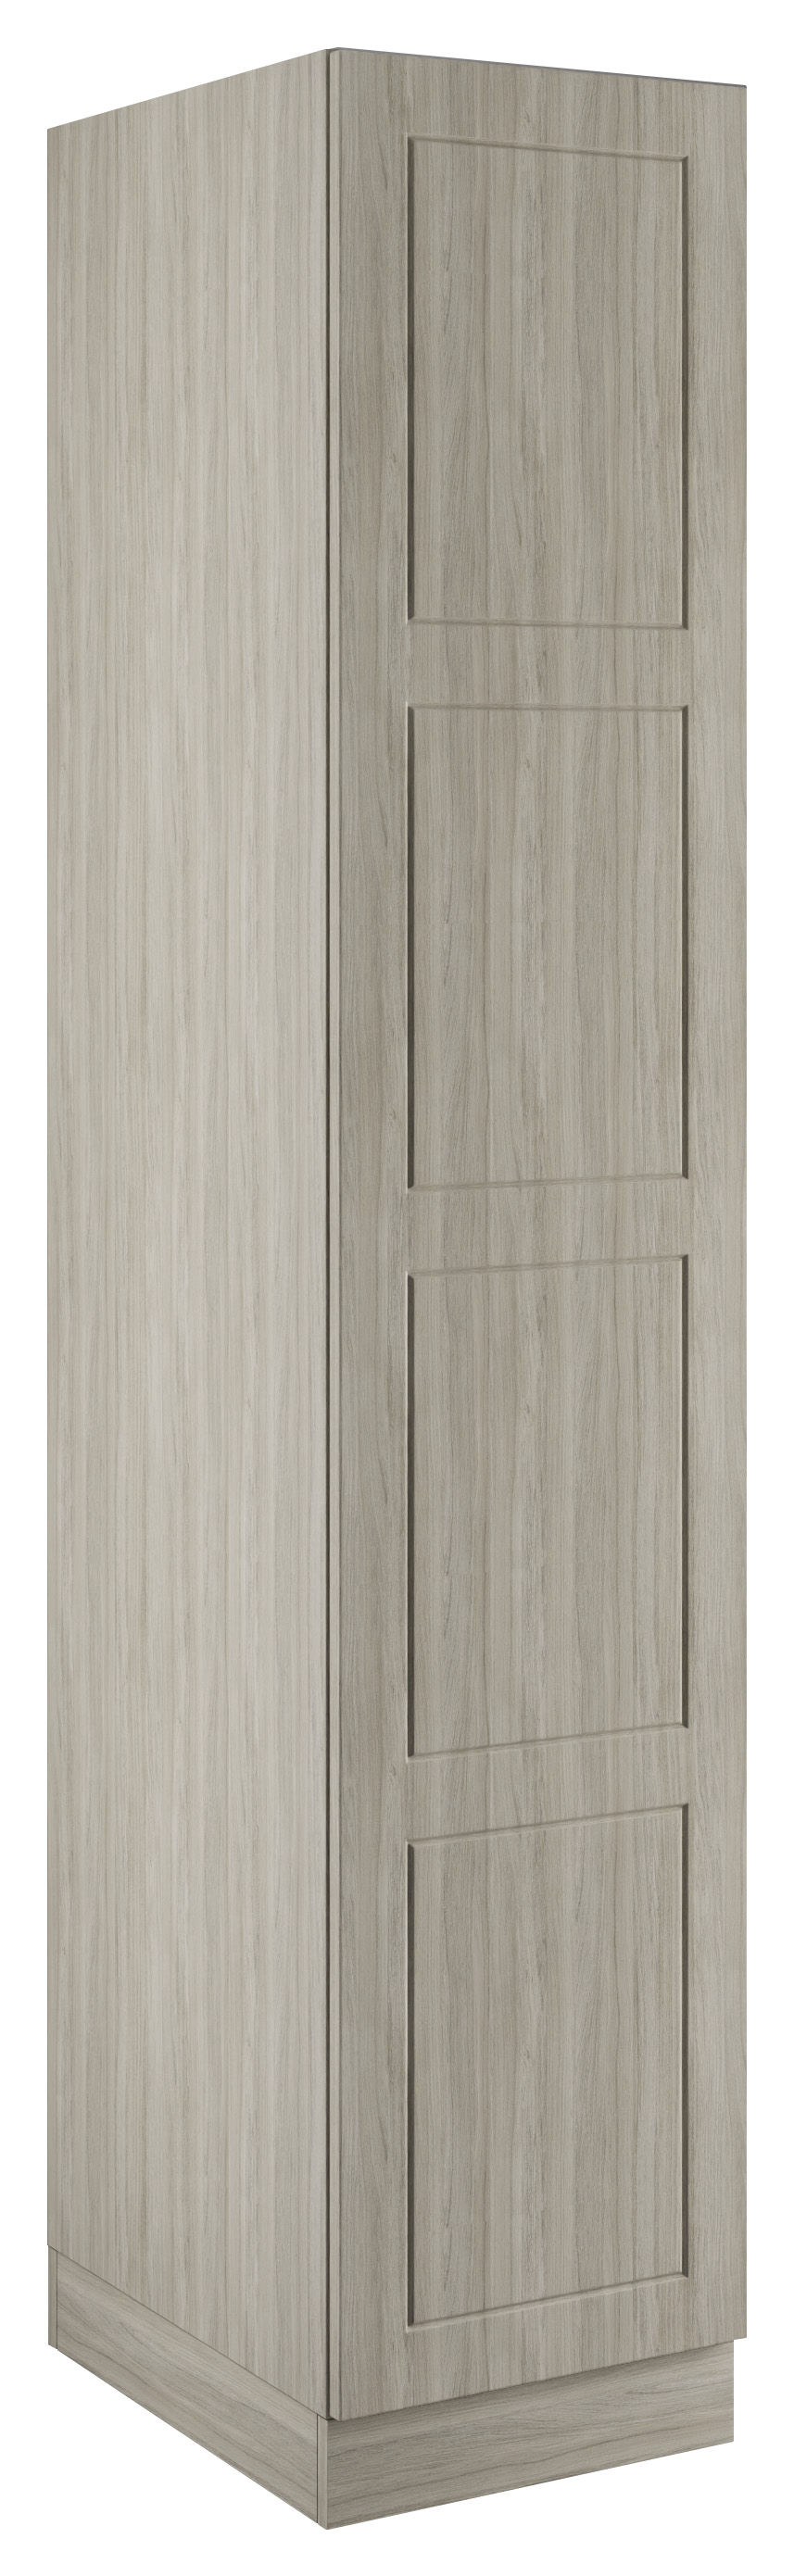 Bramham Urban Oak Single Wardrobe with Shelves - 450 x 2260 x 608mm